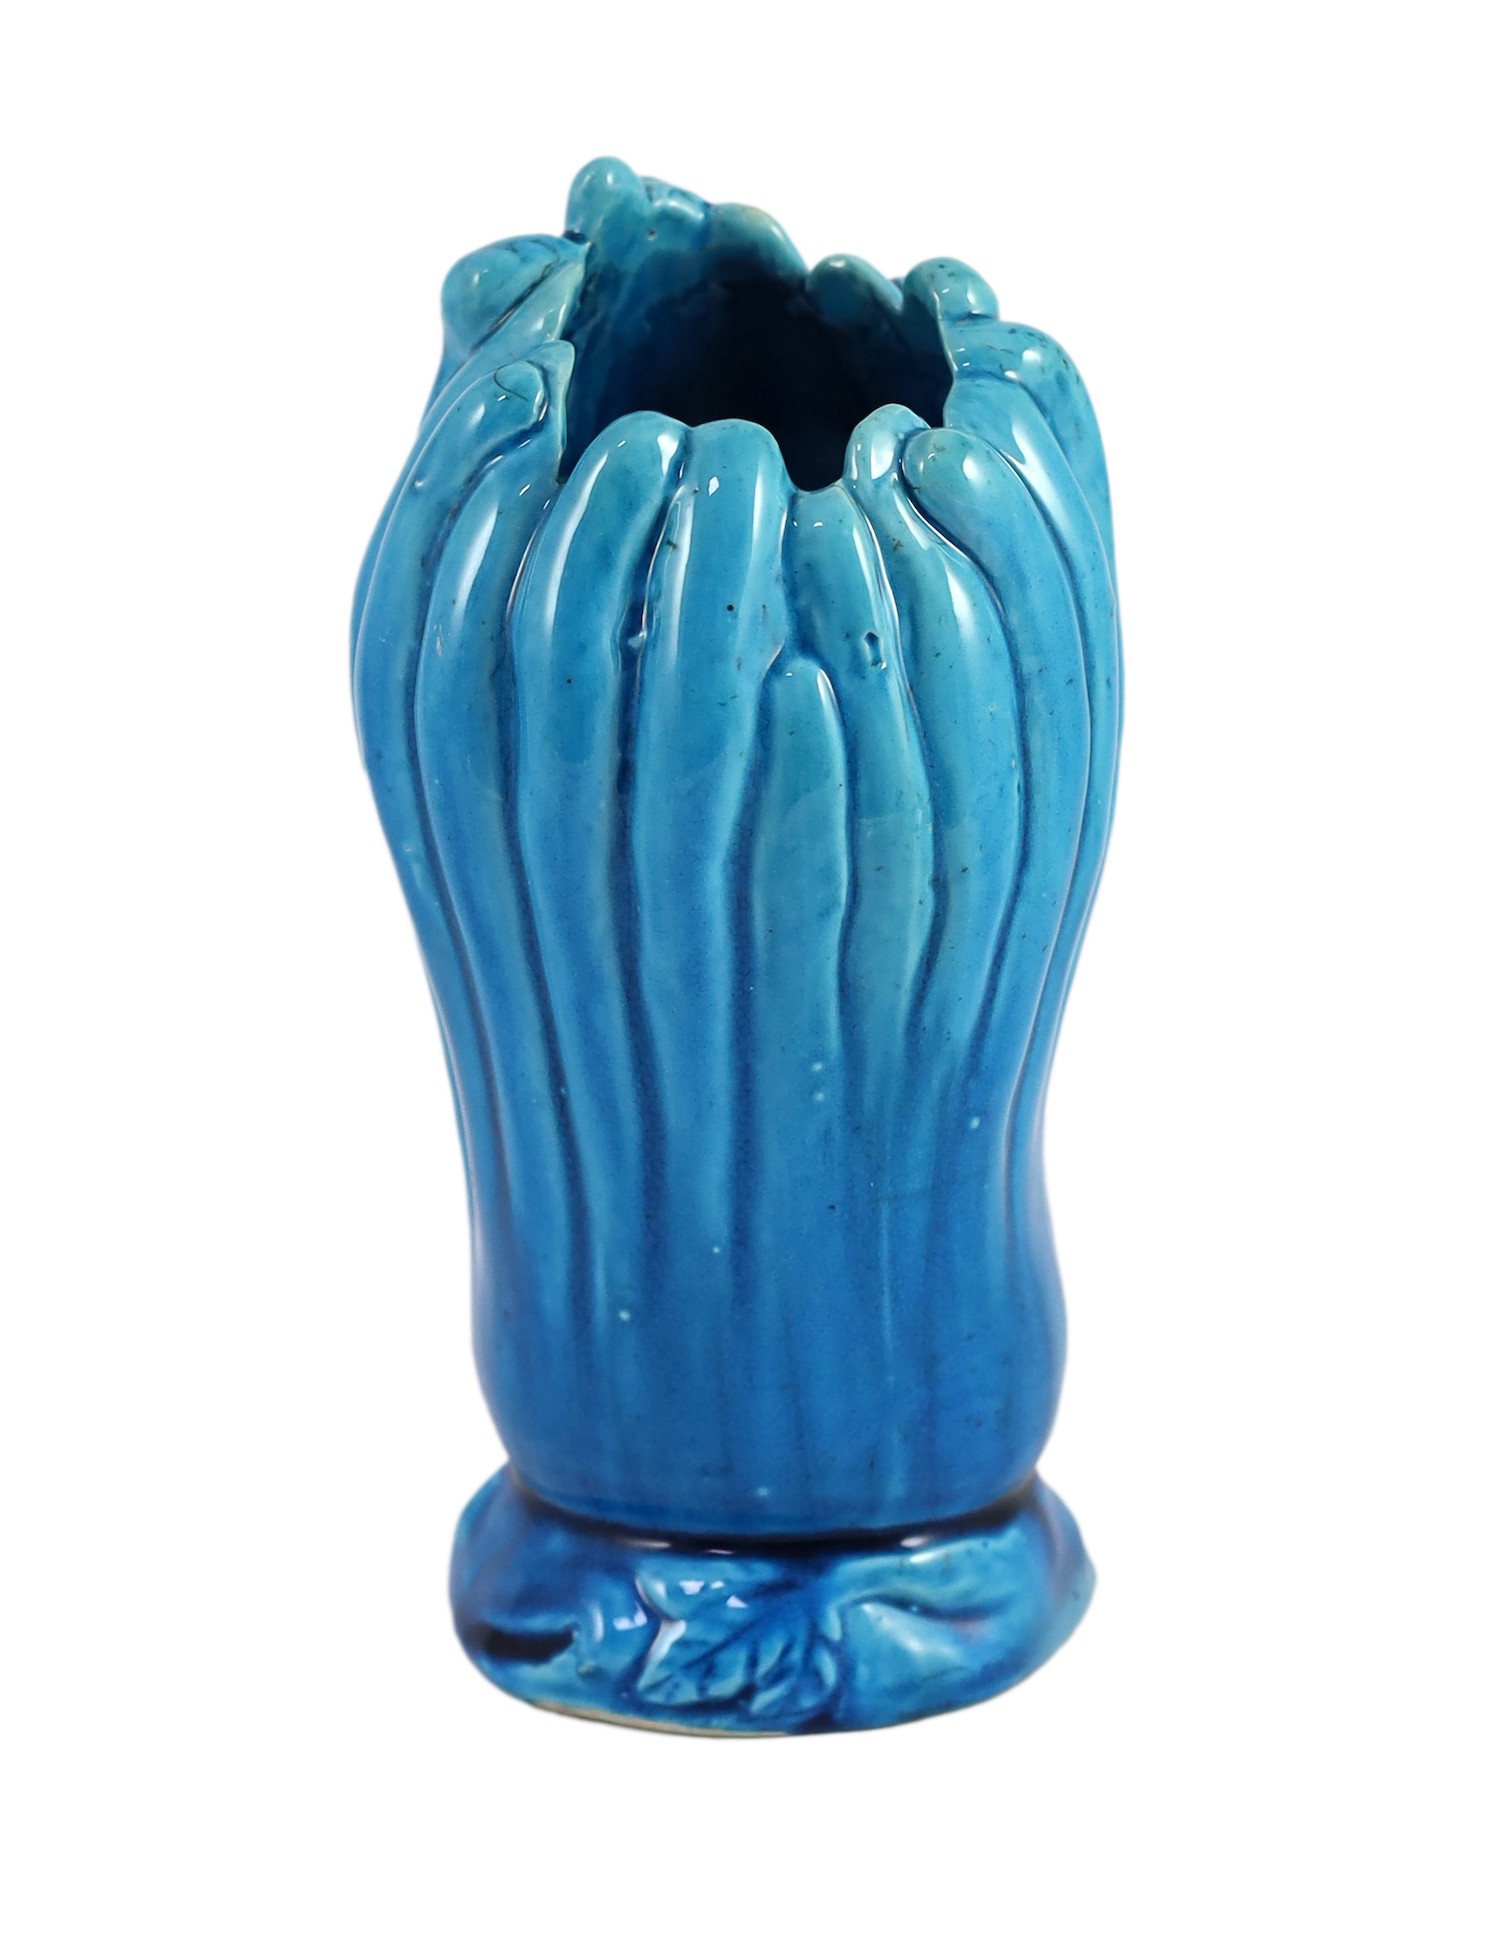 A Chinese turquoise glazed ‘finger citron’ vase, 18th century, 22cm high, restoration